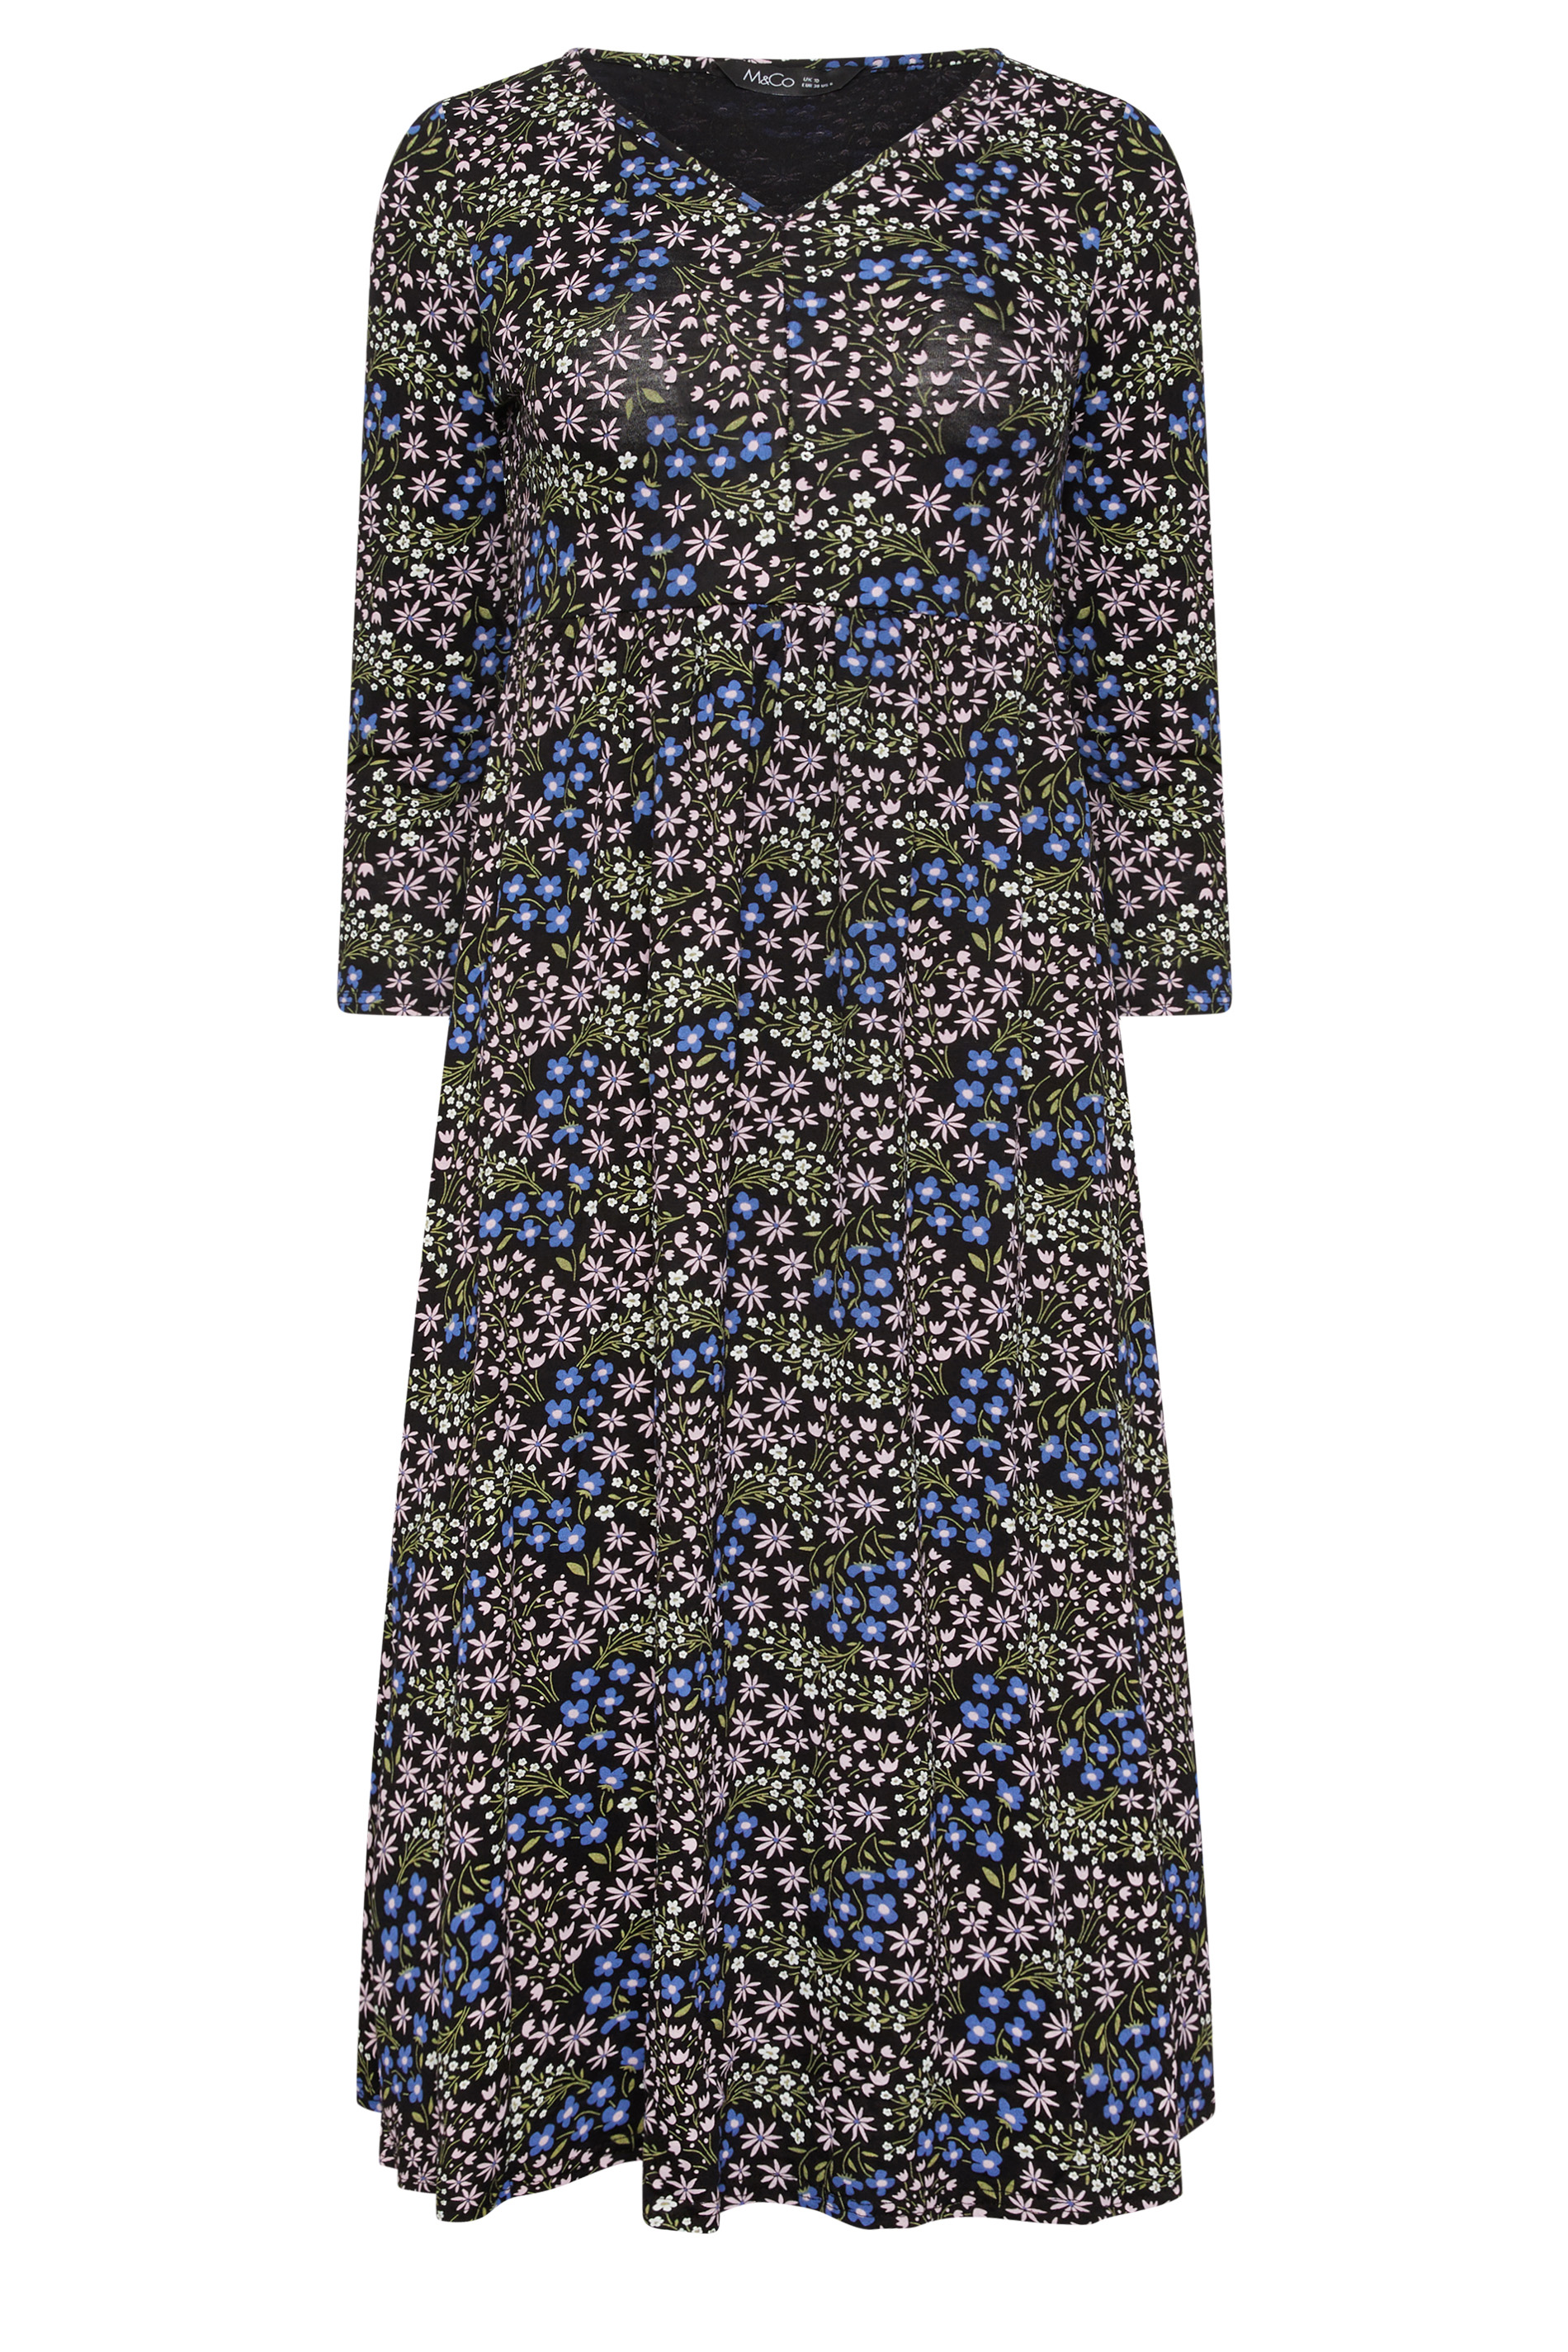 M&Co Petite Black Ditsy Floral Print Midi Dress | M&Co